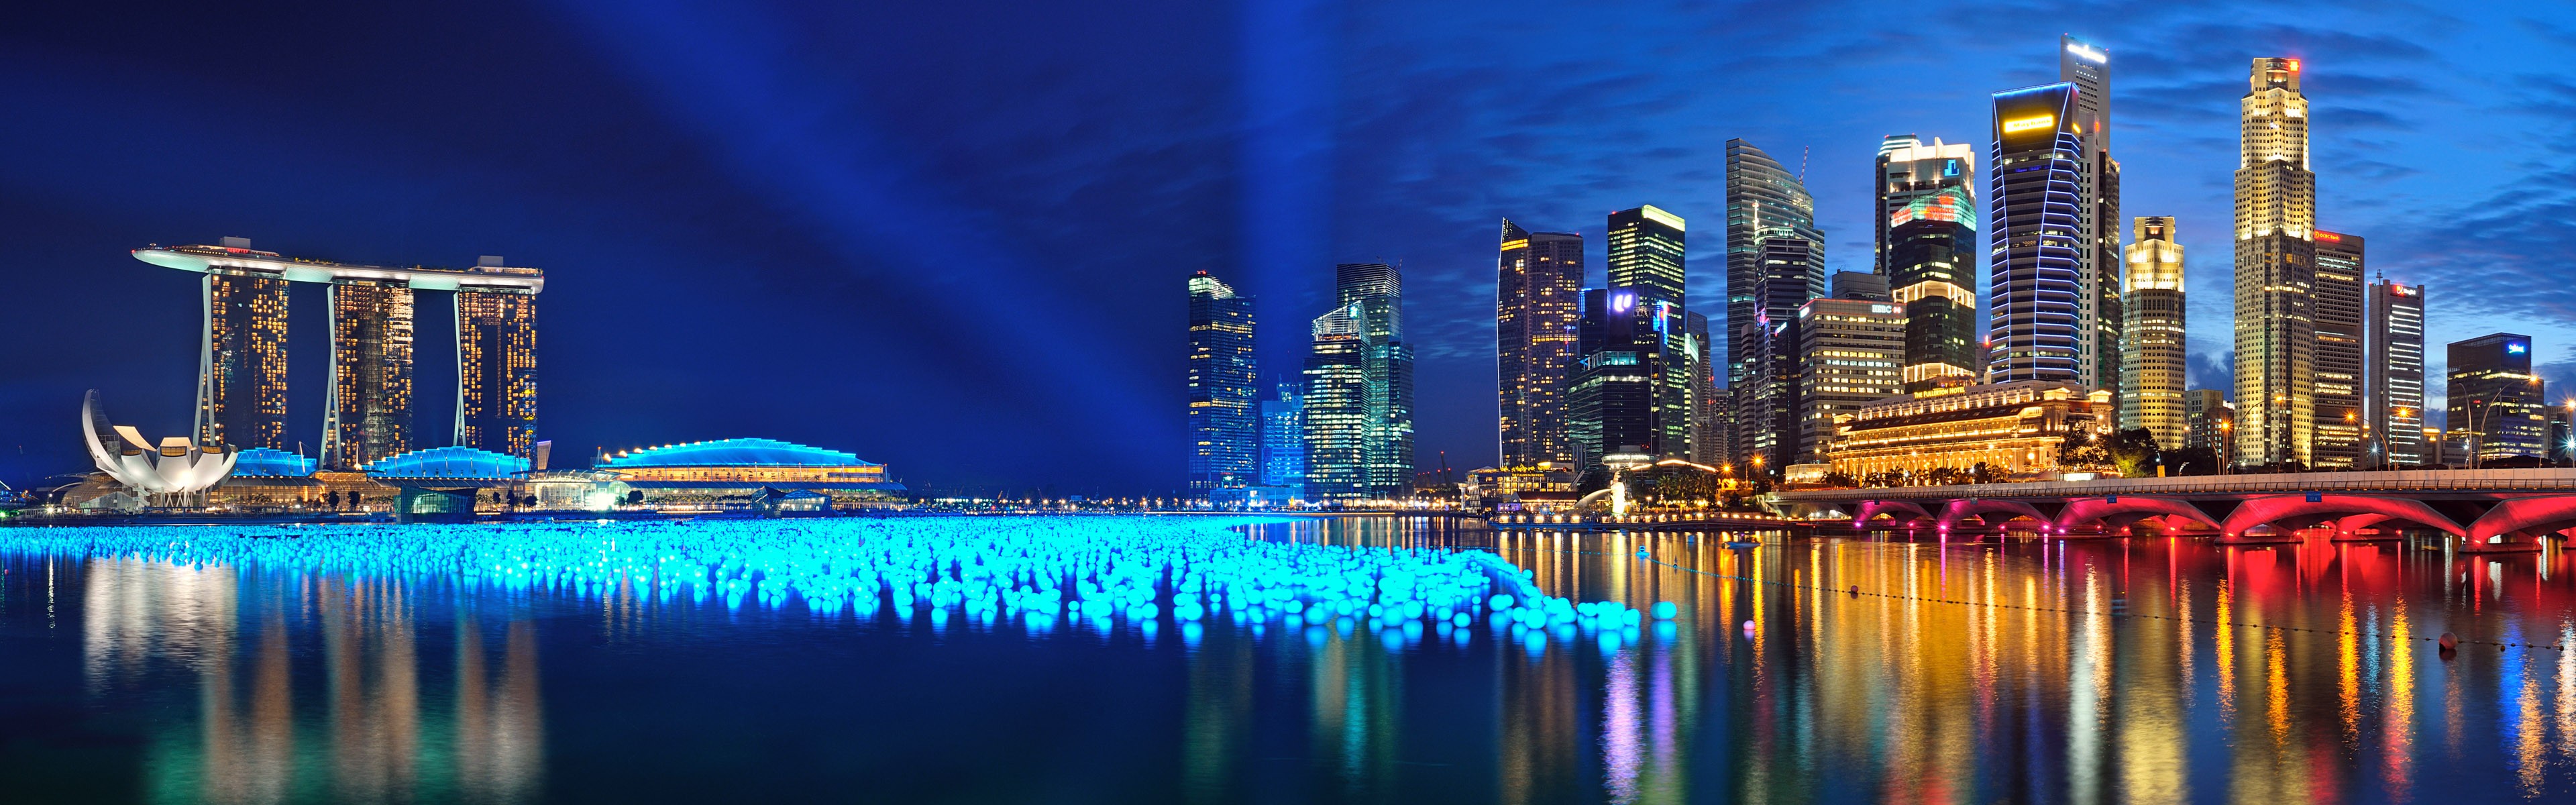 Singapore, glowing, skyscrapers, city lights, panorama